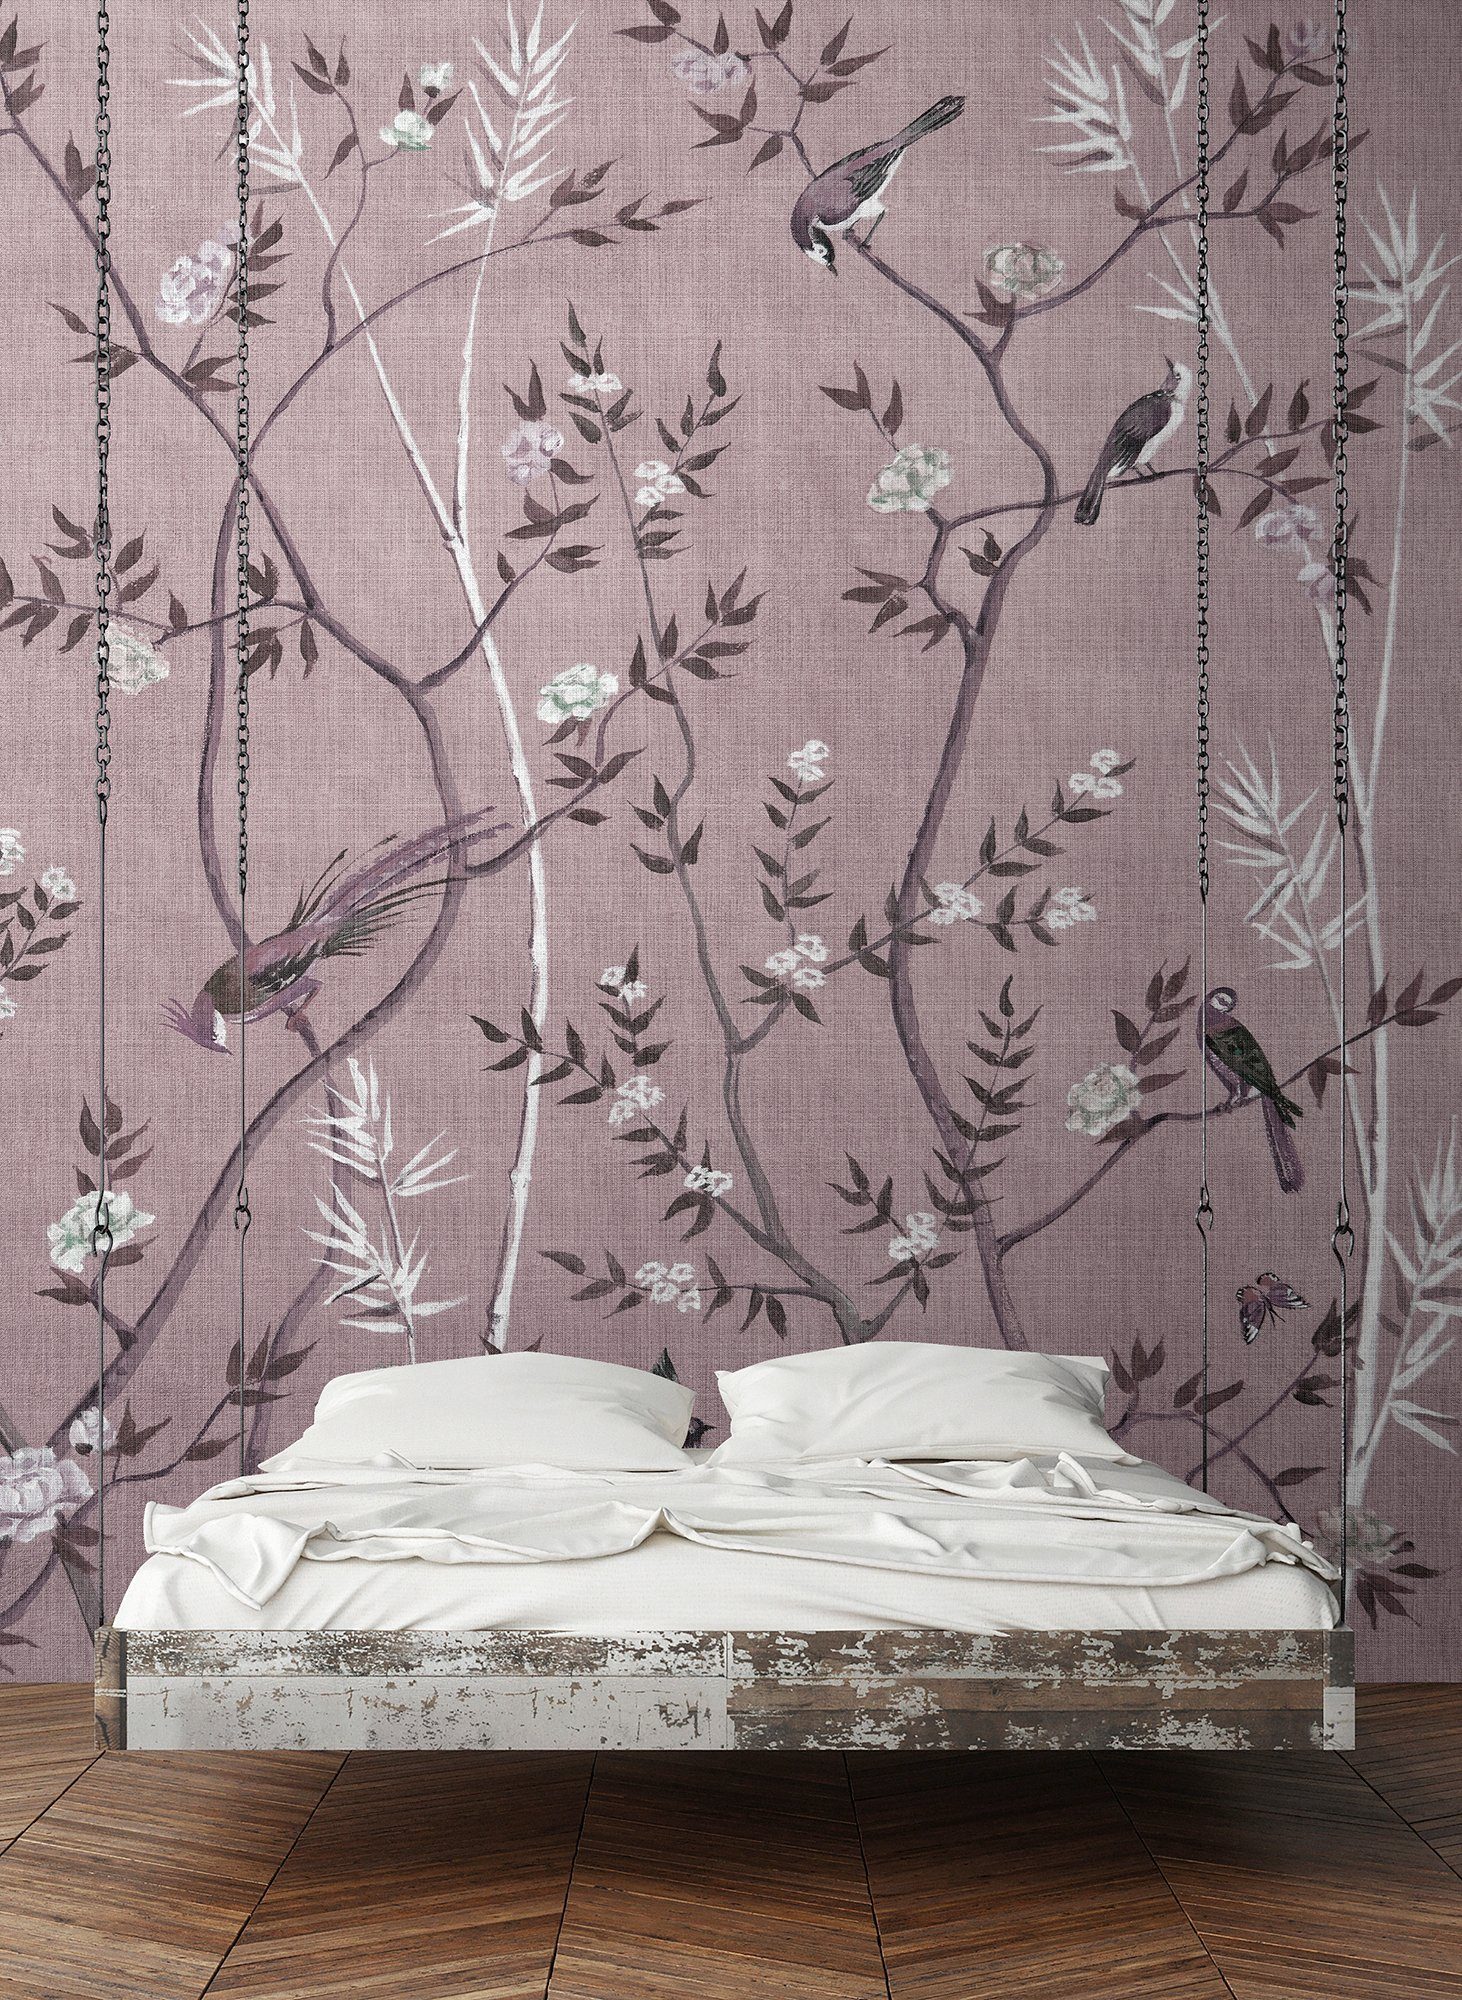 violett walls Patel Vlies, living Room, Tea Walls glatt, Fototapete Wand by